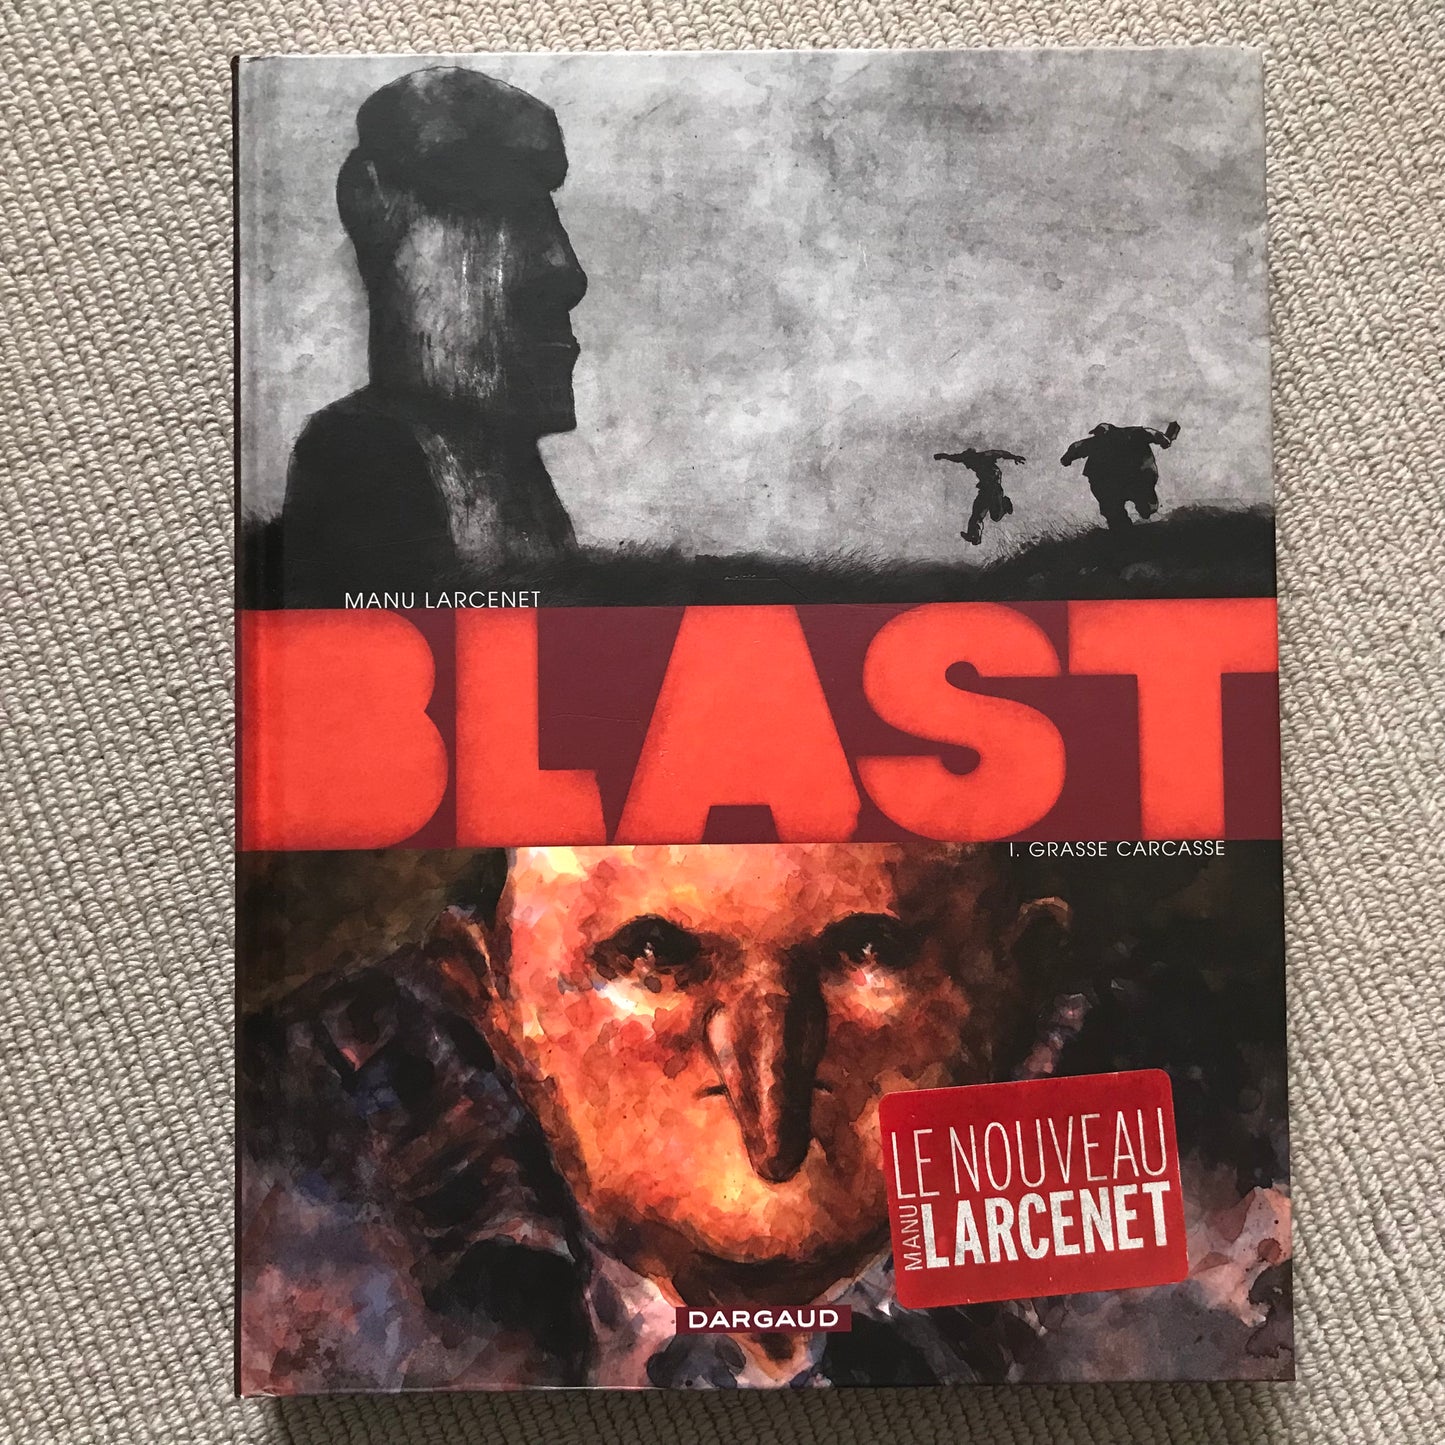 Blast 1: Grasse carcasse - Manu Larcenet